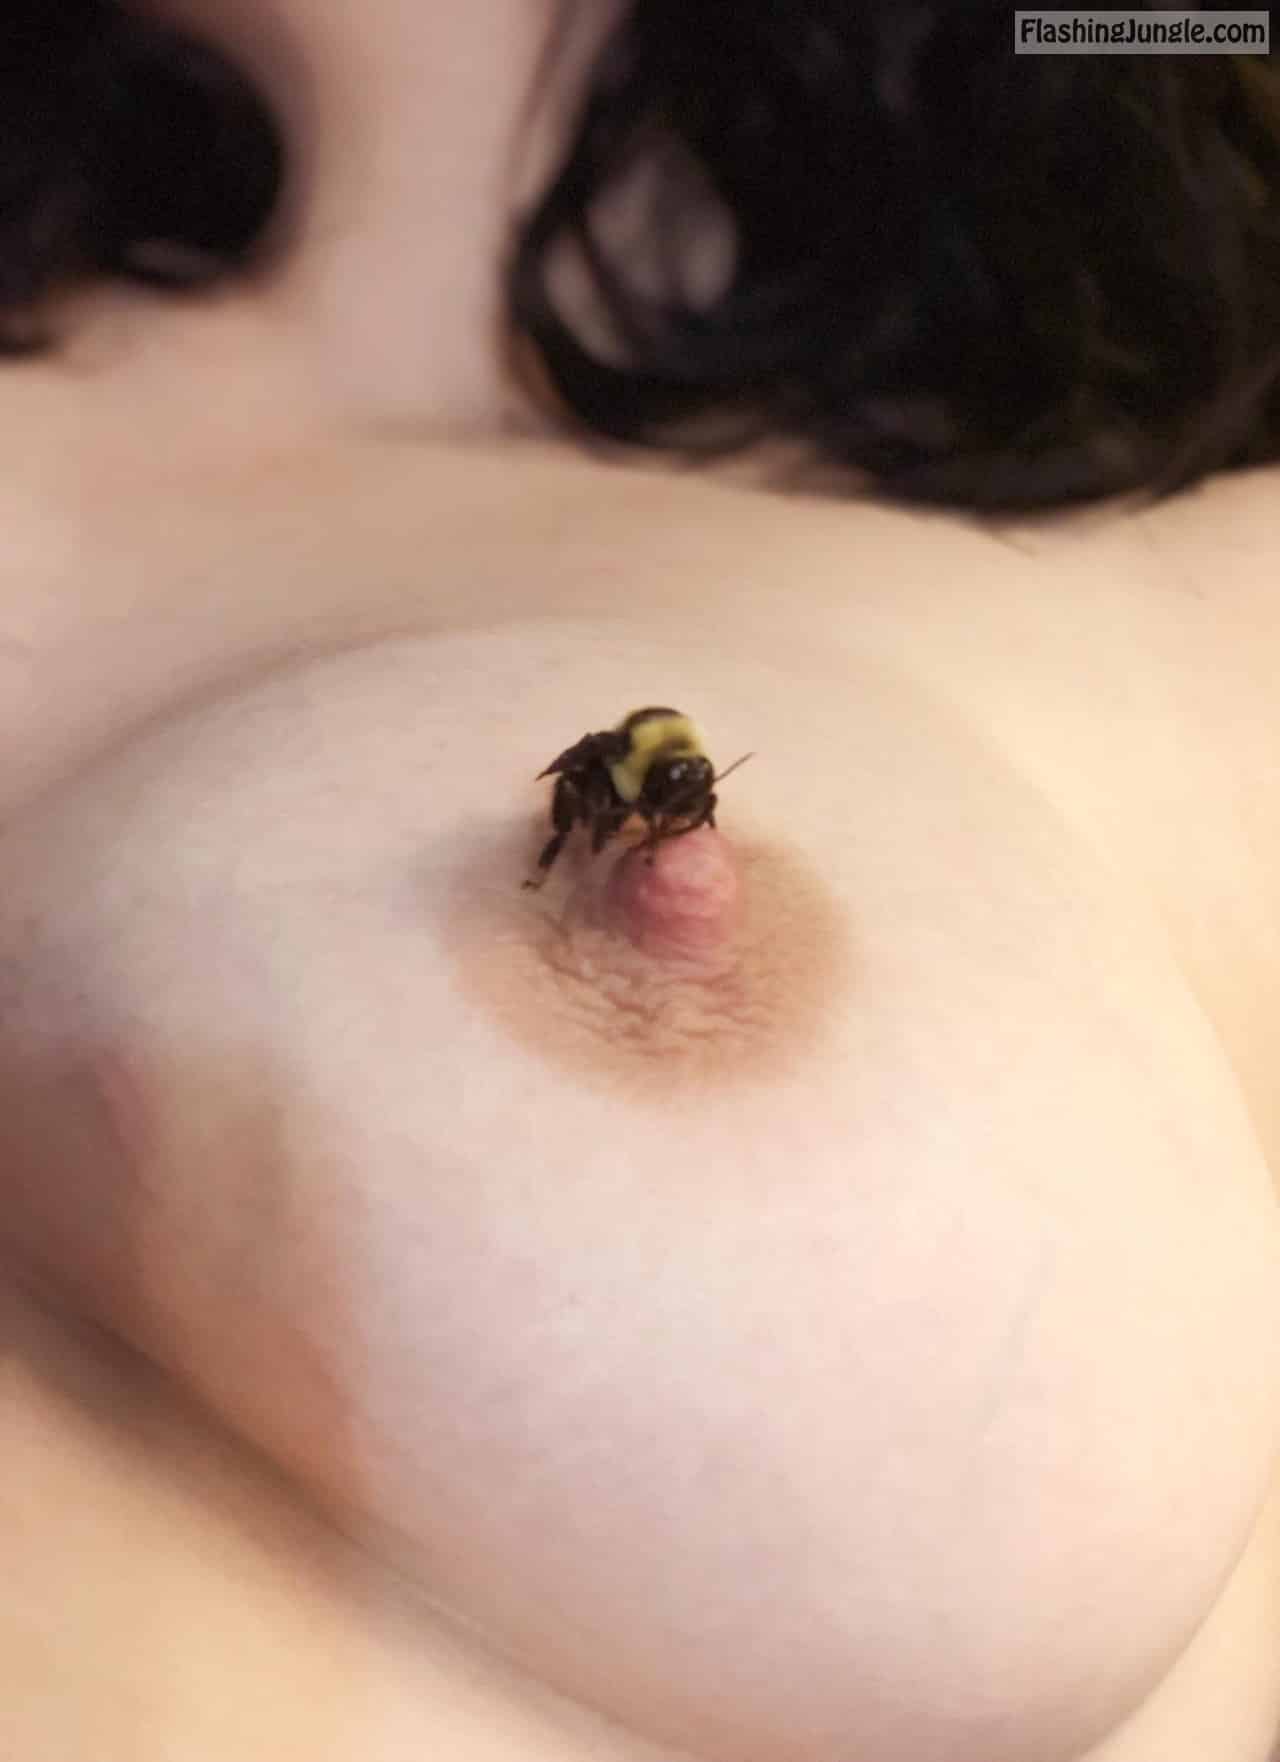 Public Flashing Pics  : Bee on nipple